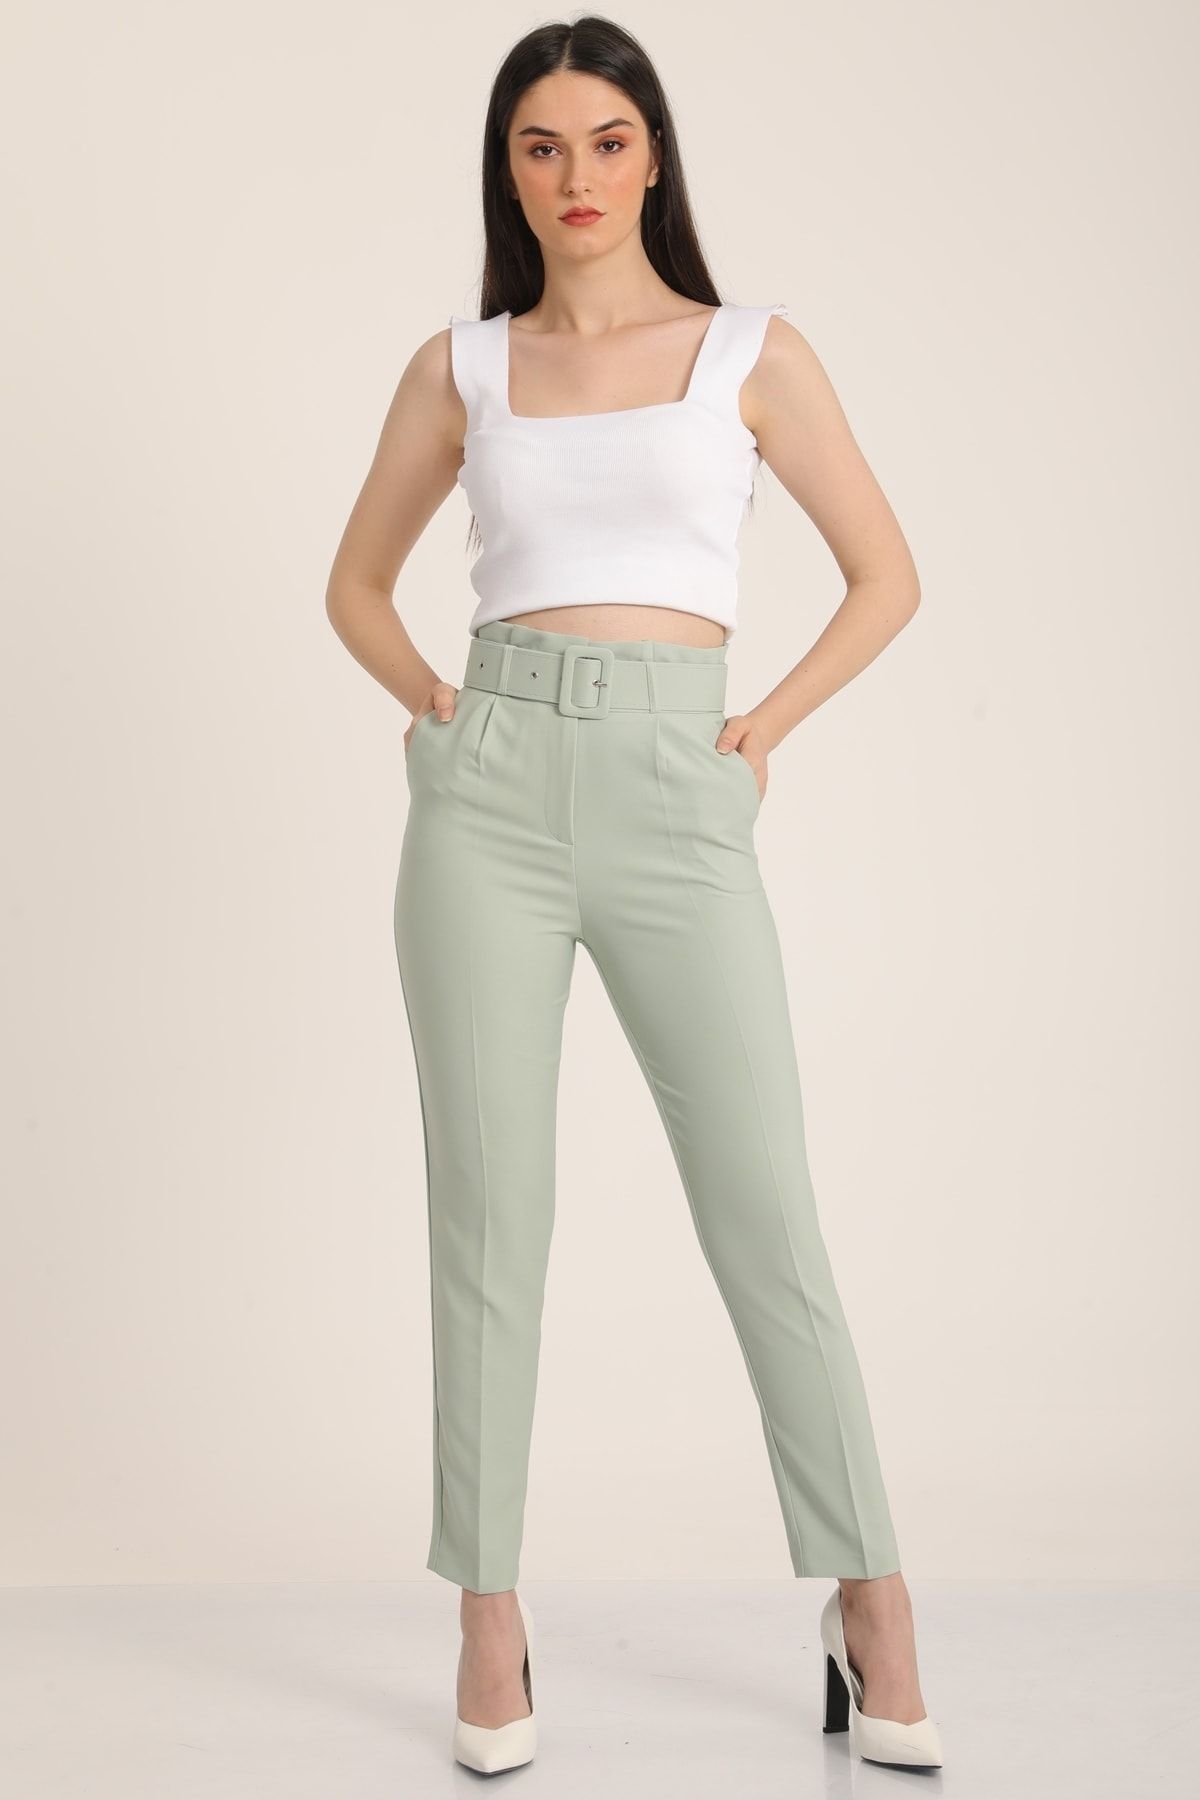 MD trend Kadın Mint Yeşil Kemerli Yüksek Bel Kumaş Pantolon Mdt5032